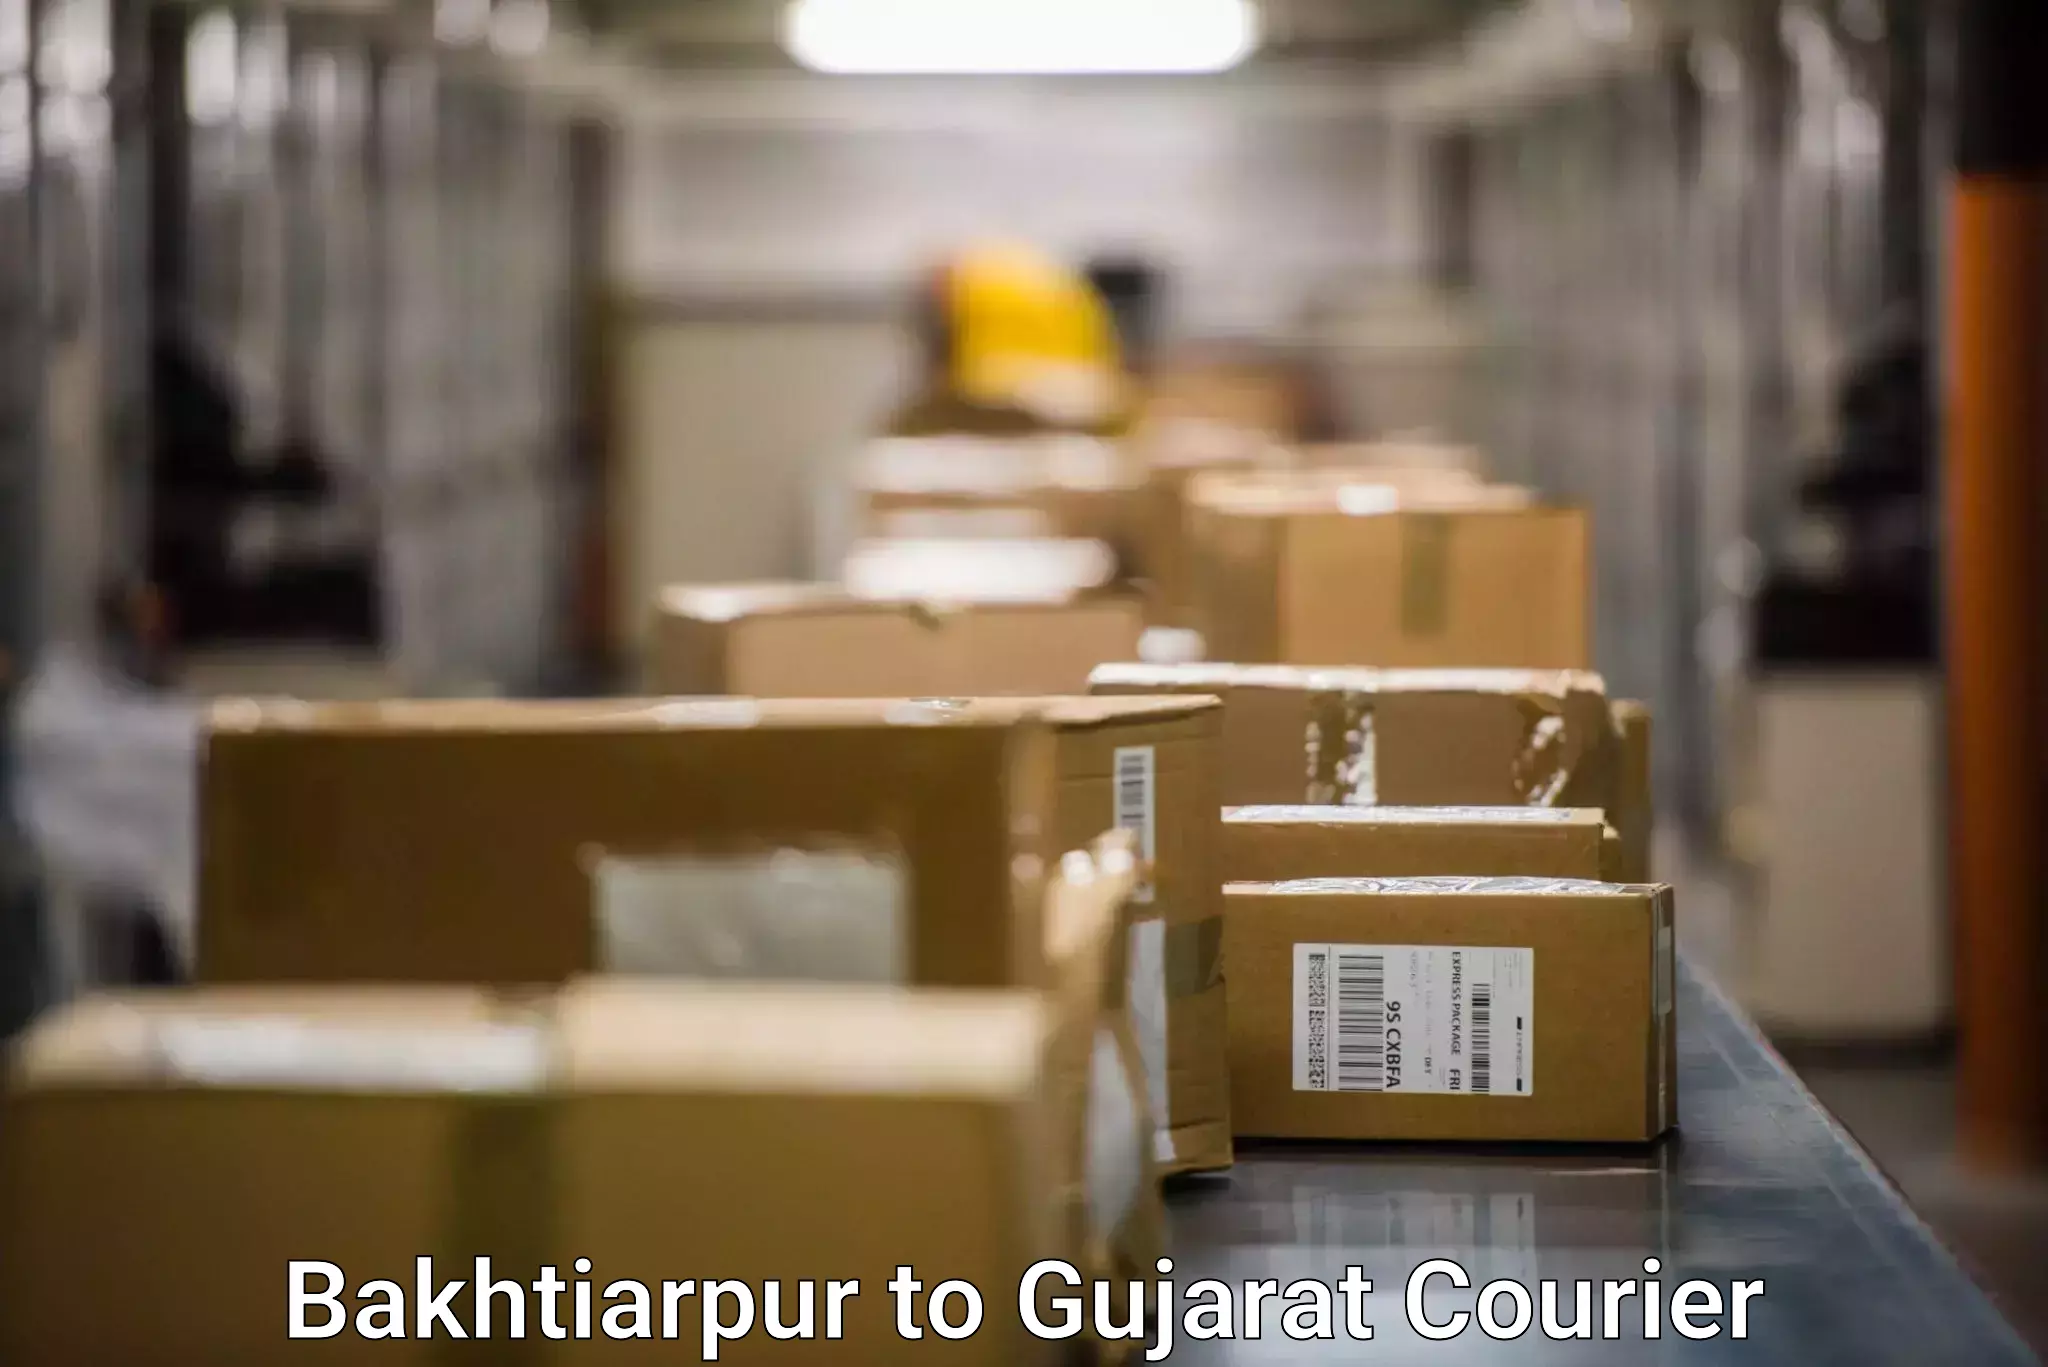 Full-service courier options Bakhtiarpur to Narmada Gujarat